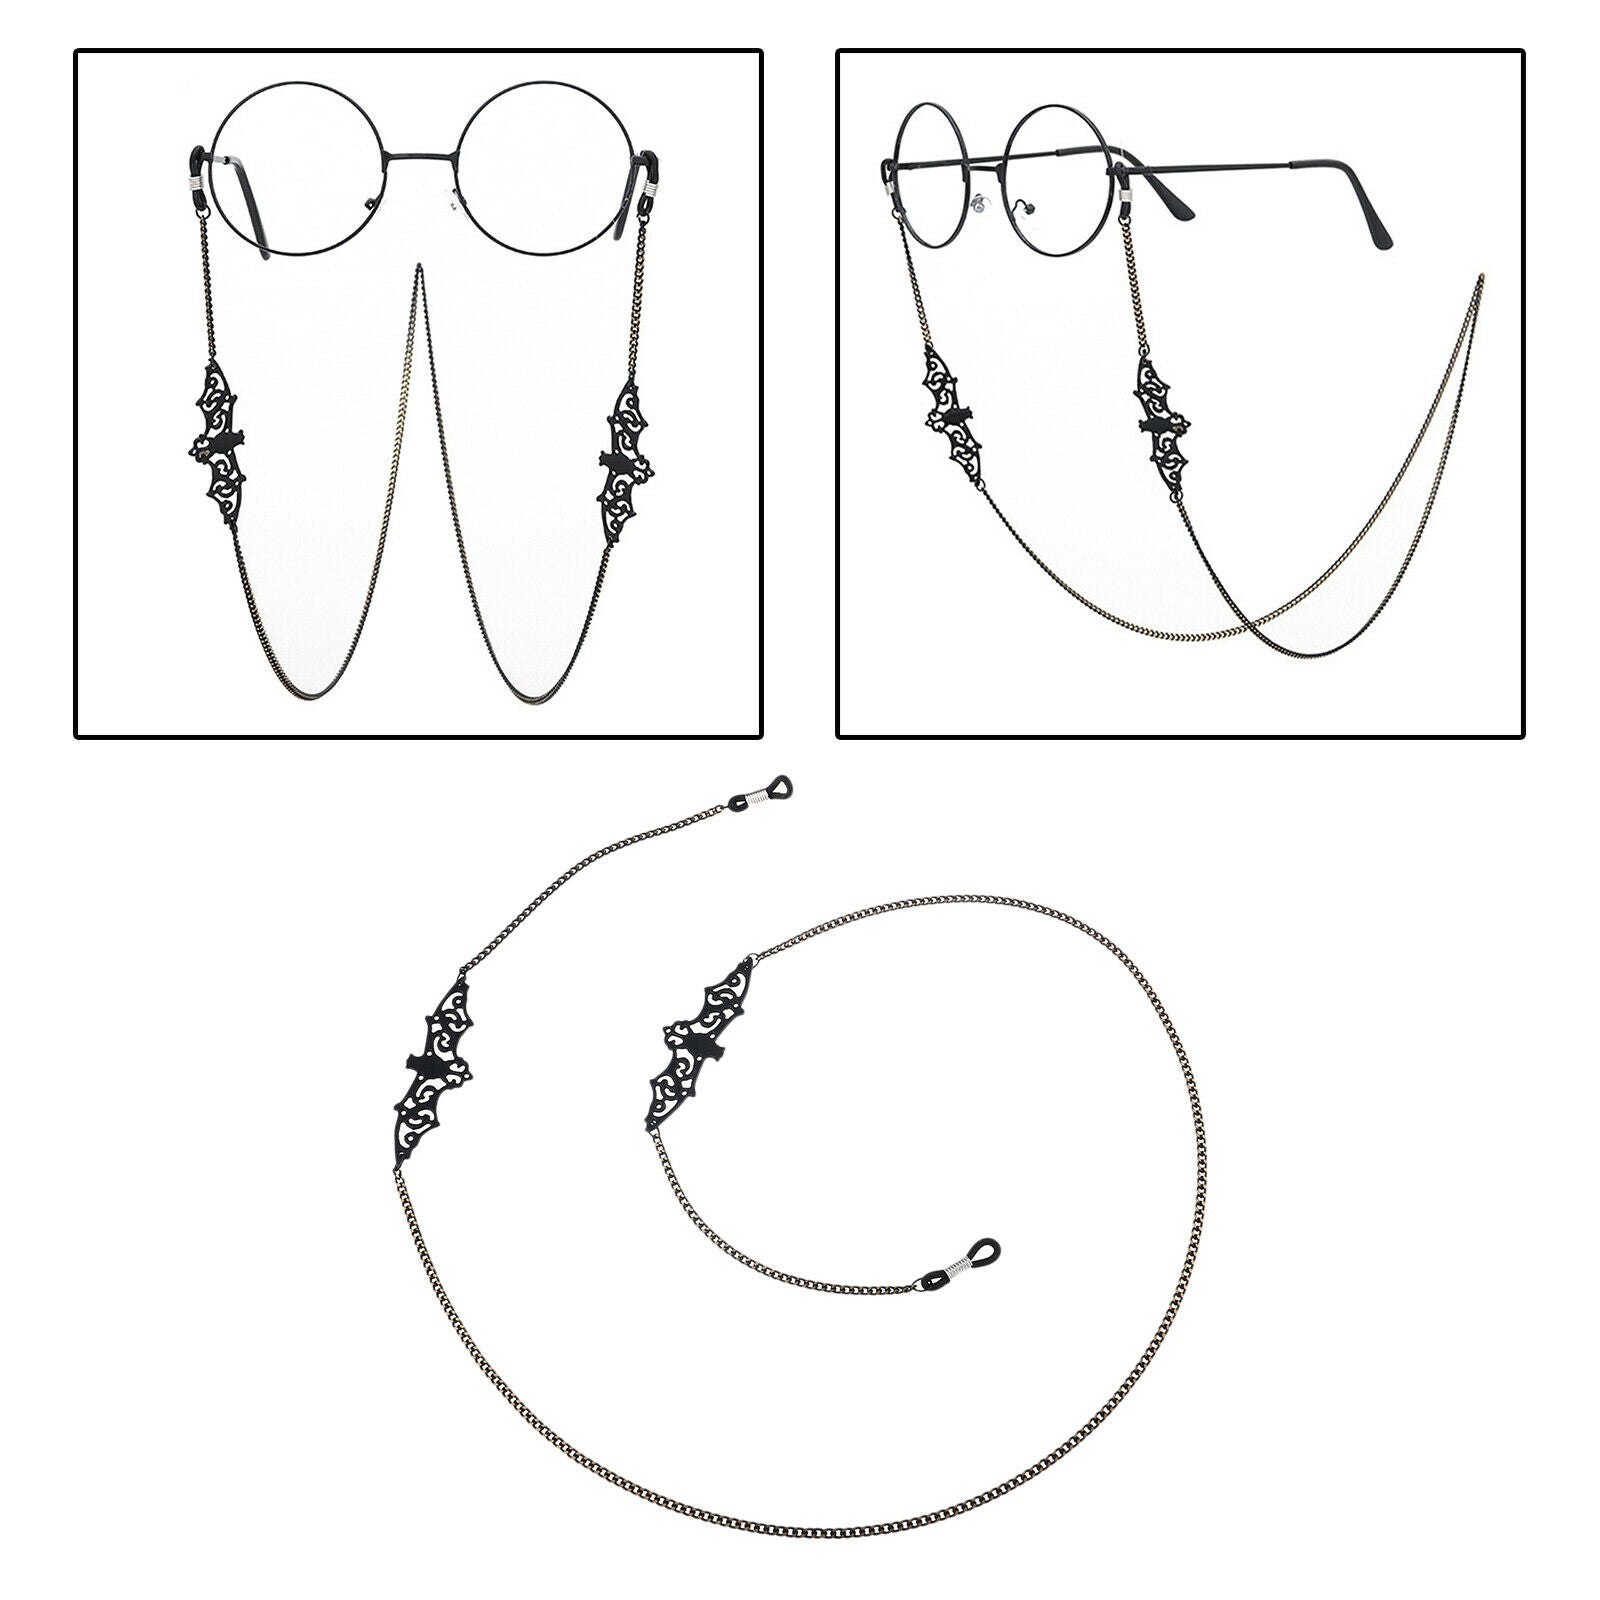 Decorative Eyeglass Chain Black Bat Decor Eyewear Retainer Necklace Lanyards